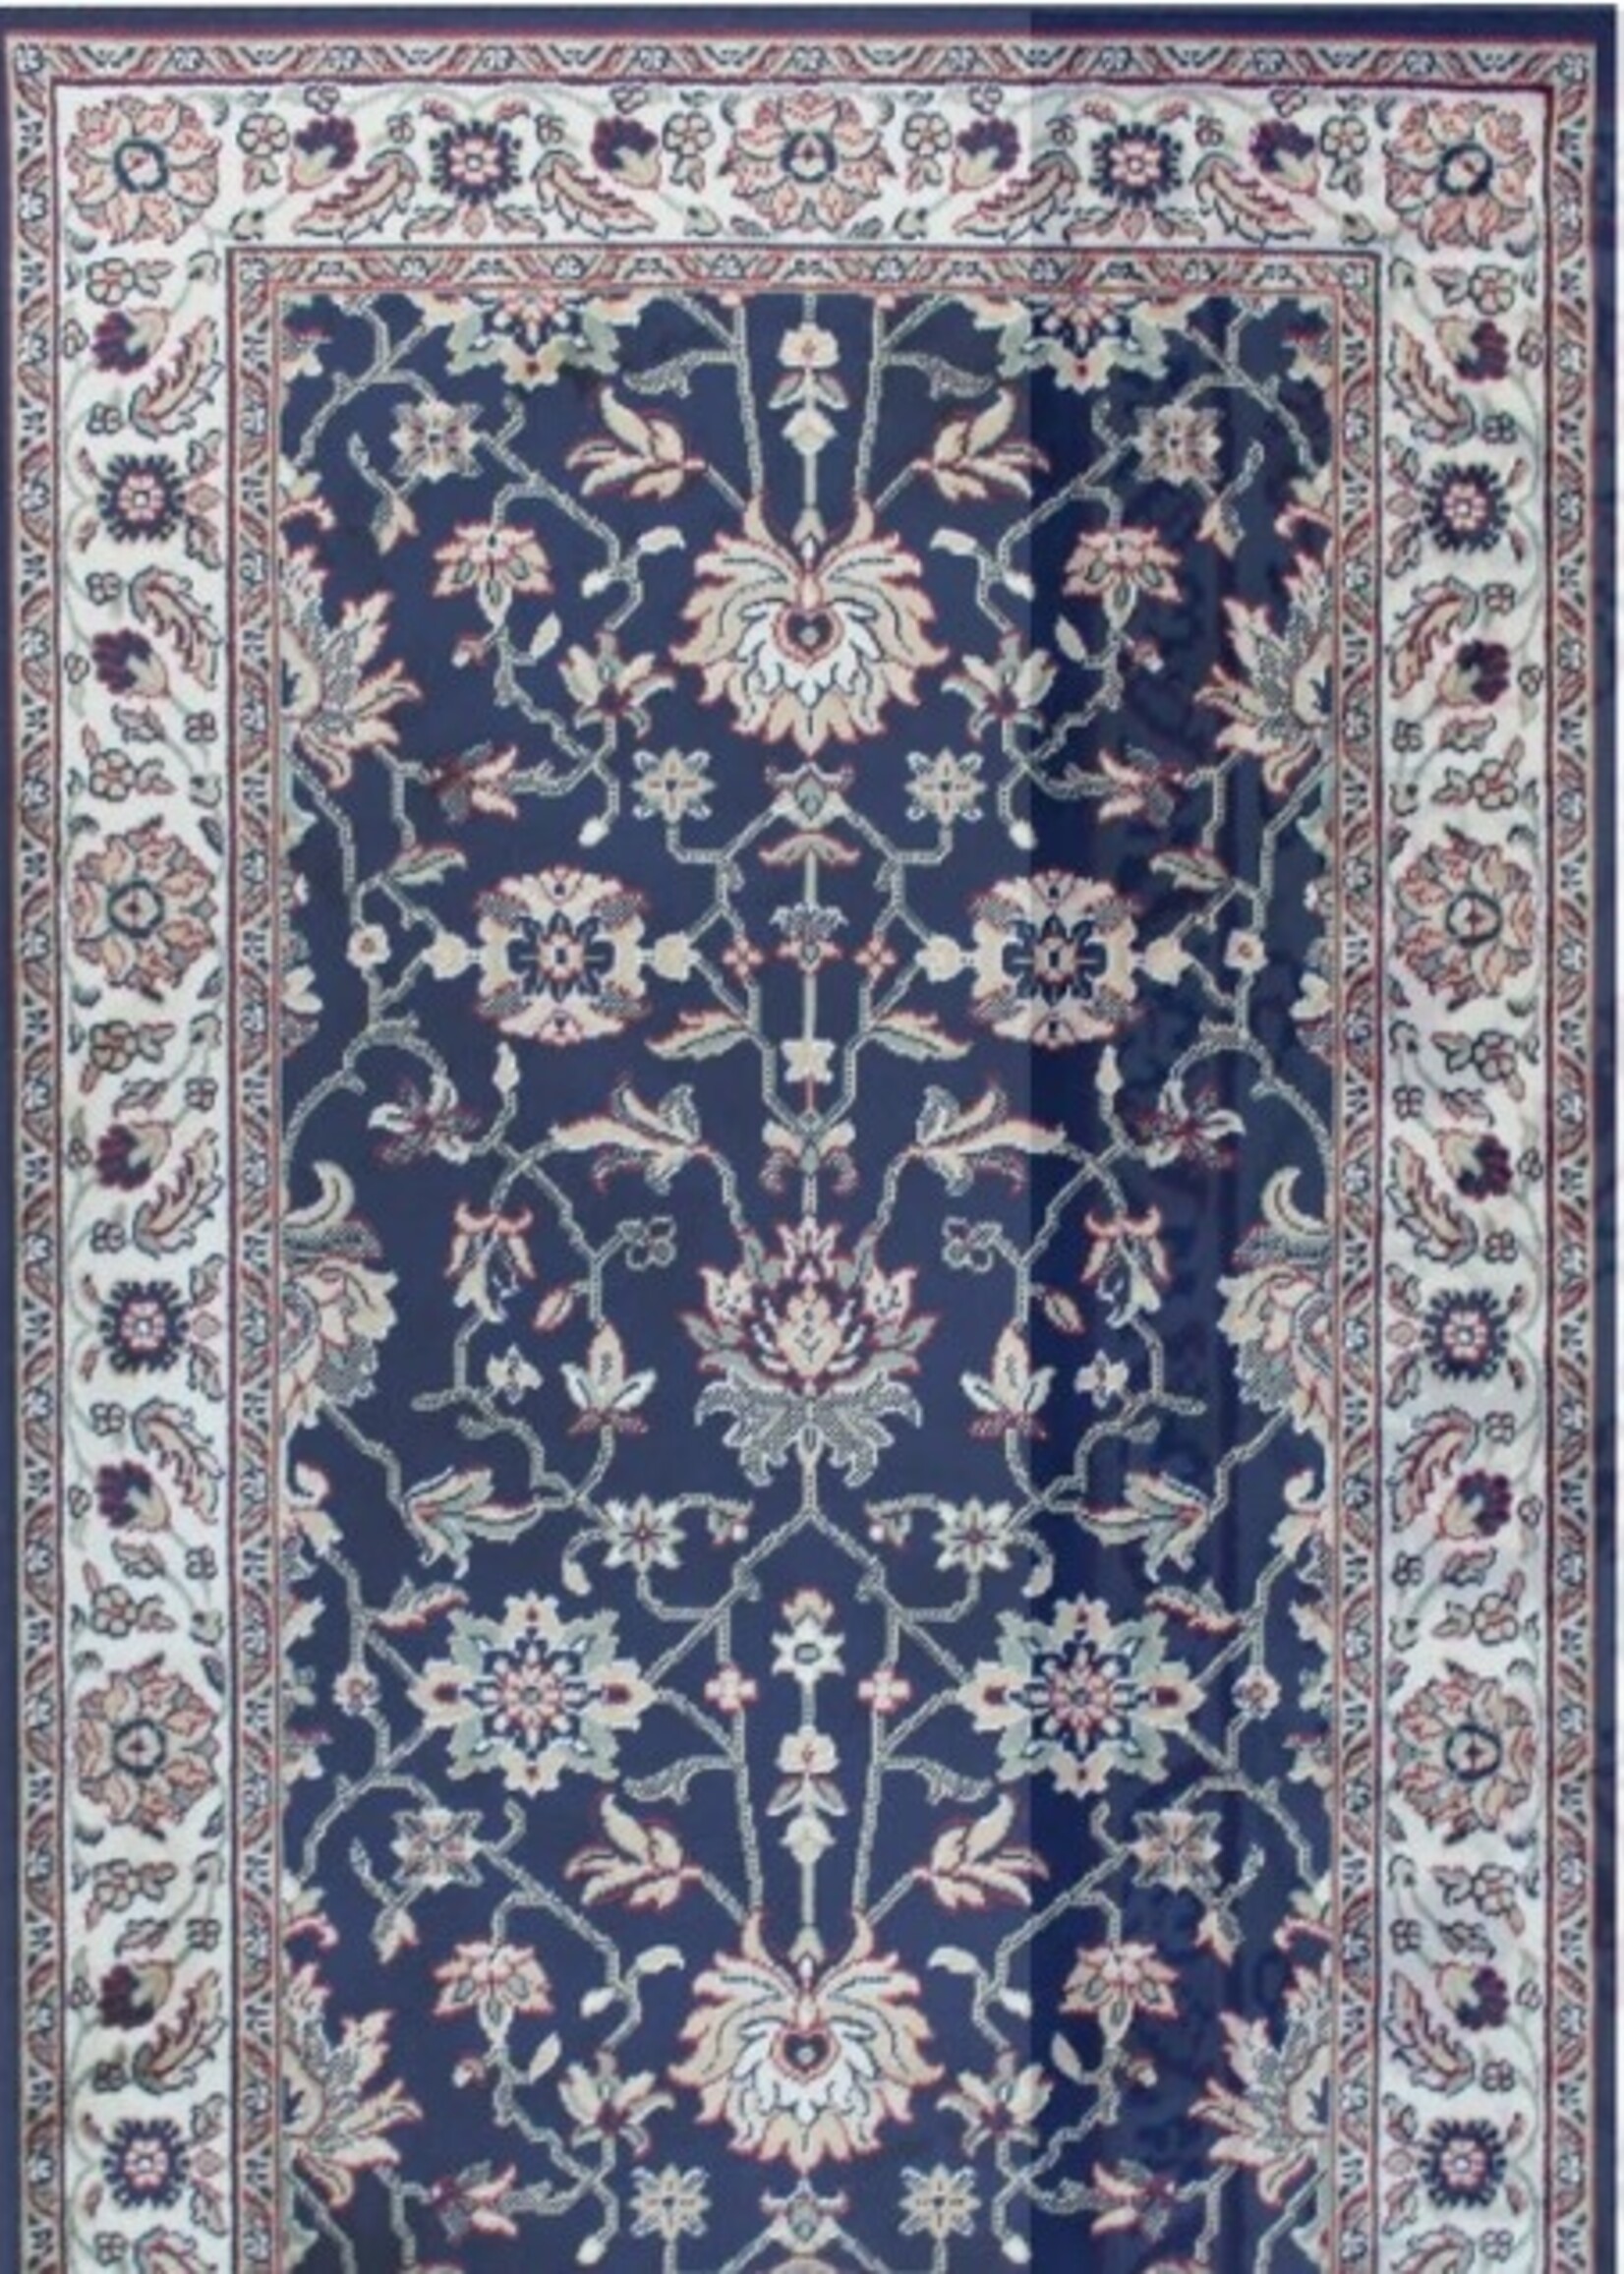 Avocado Decor Art Silk Area Carpet * Majesty * Navy * 26" x 42"